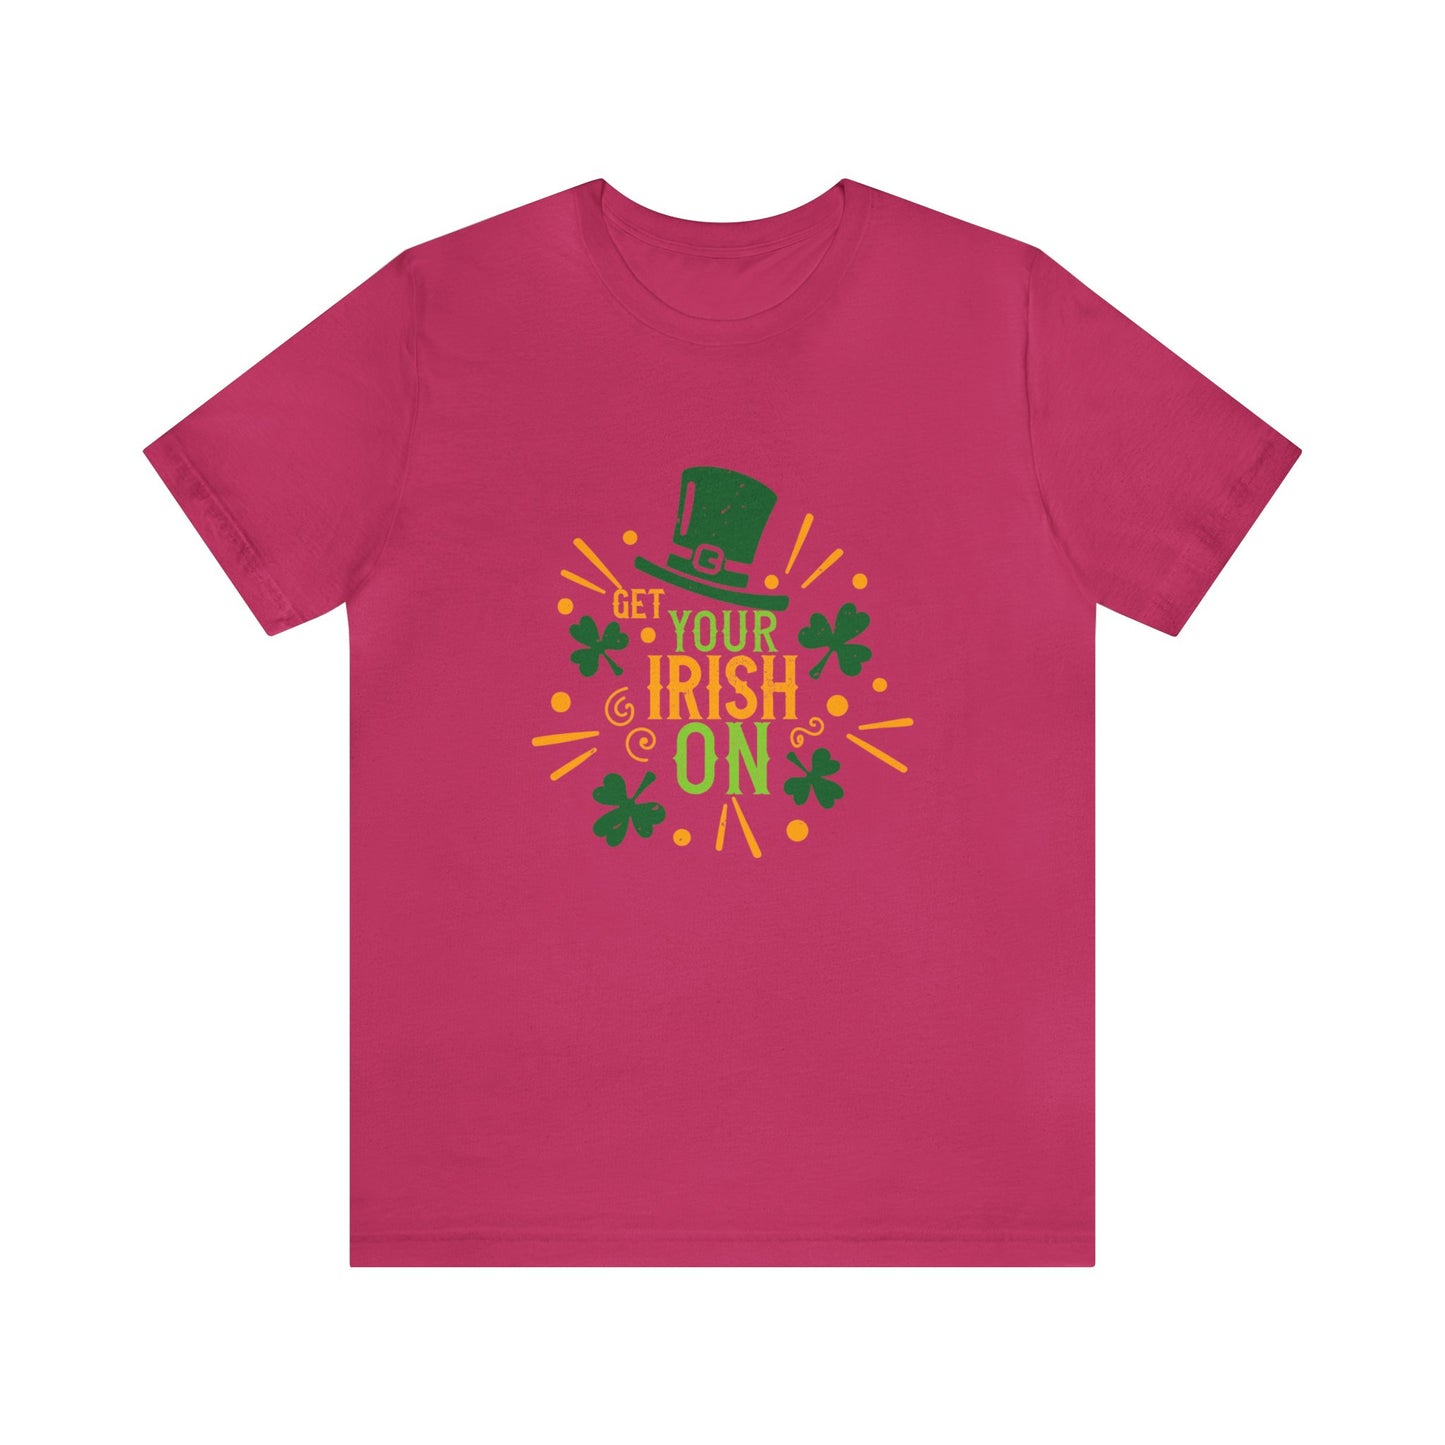 Get Your Irish On - Men's T-shirt